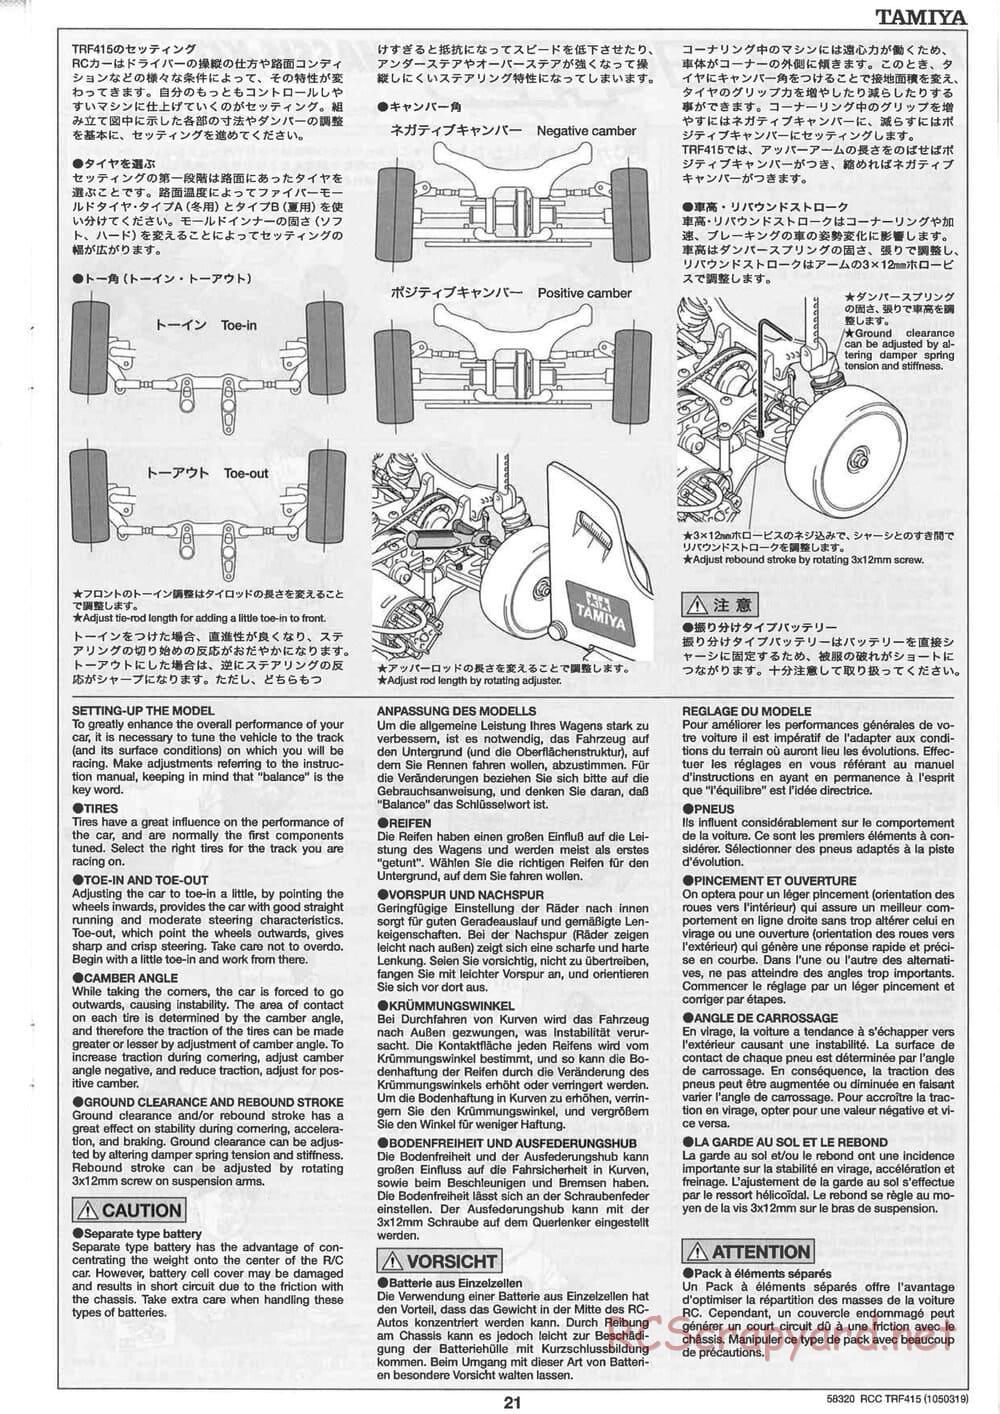 Tamiya - TRF415 Chassis - Manual - Page 21